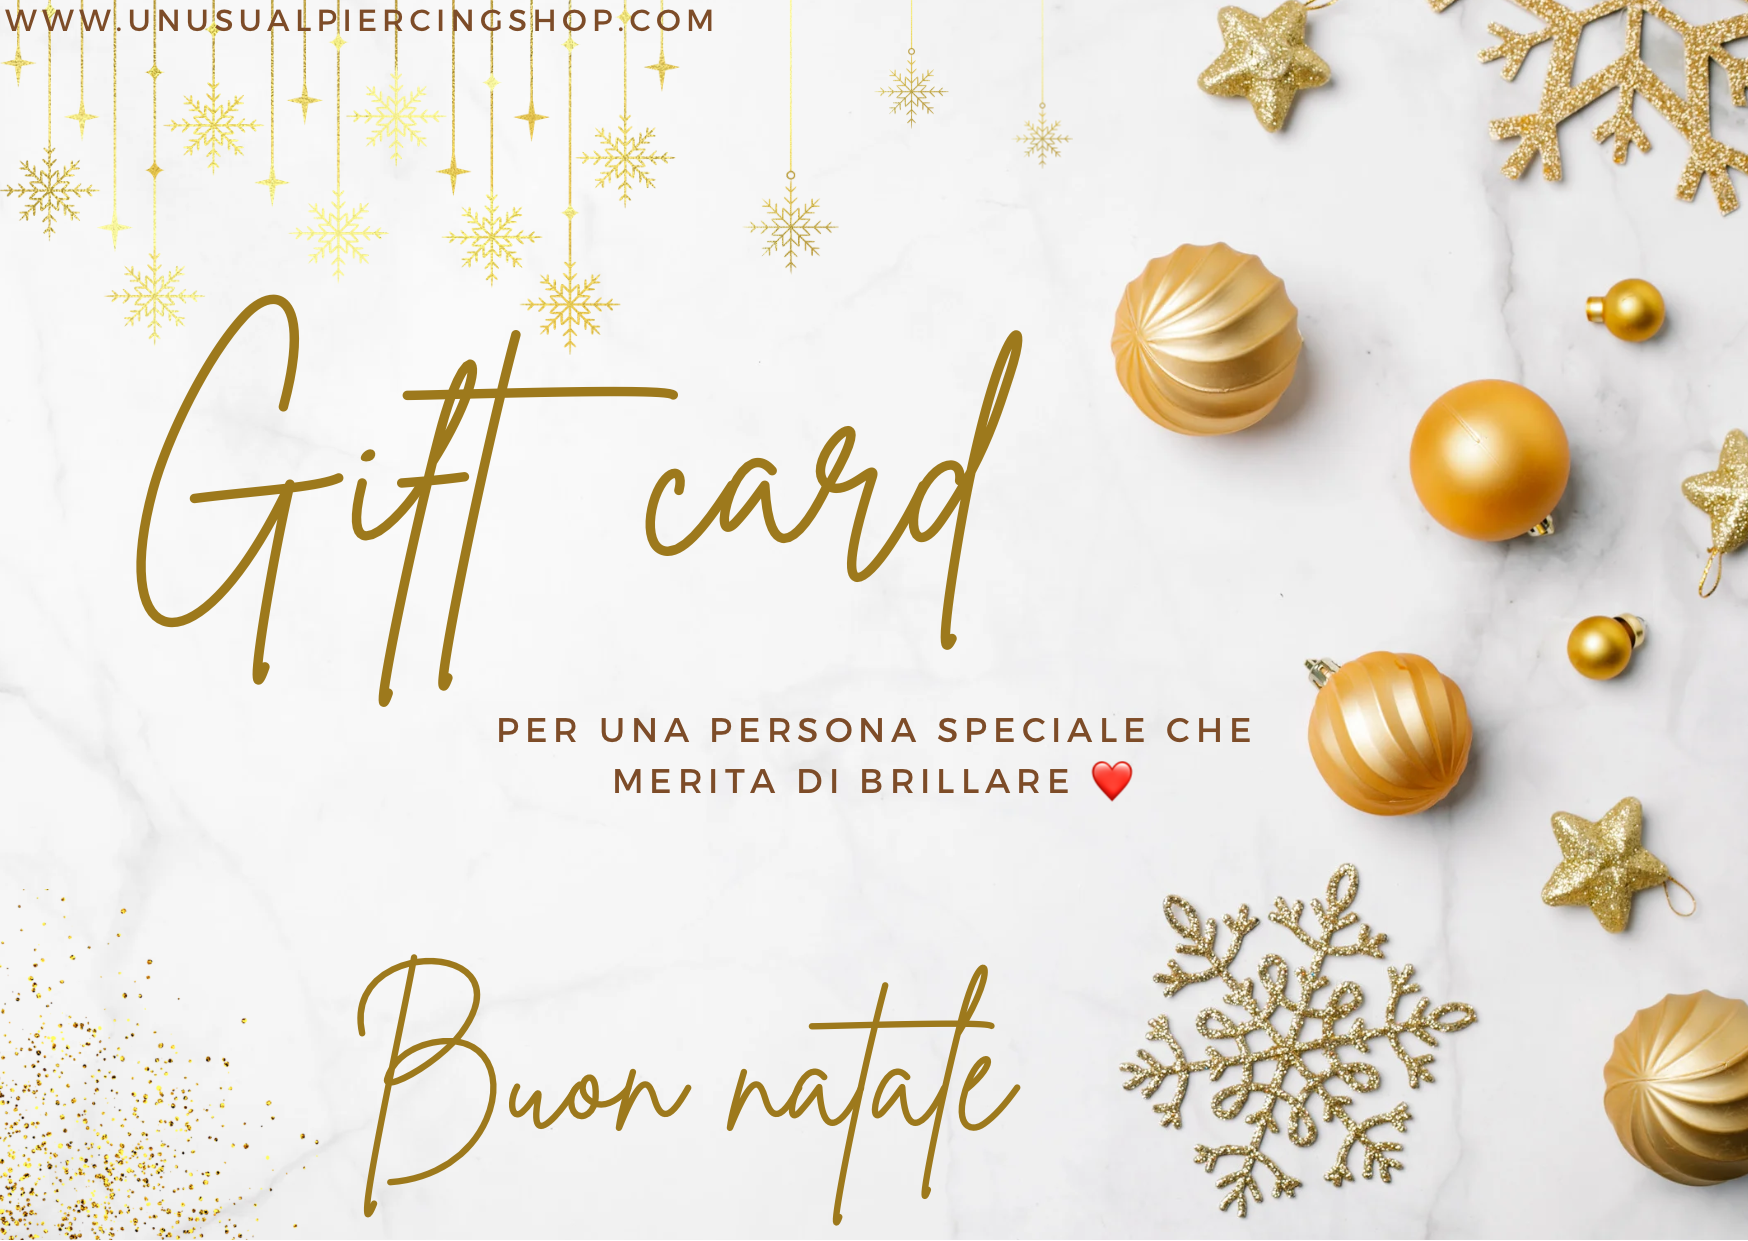 Gift Card di Natale – UnsualPiercingShop.com